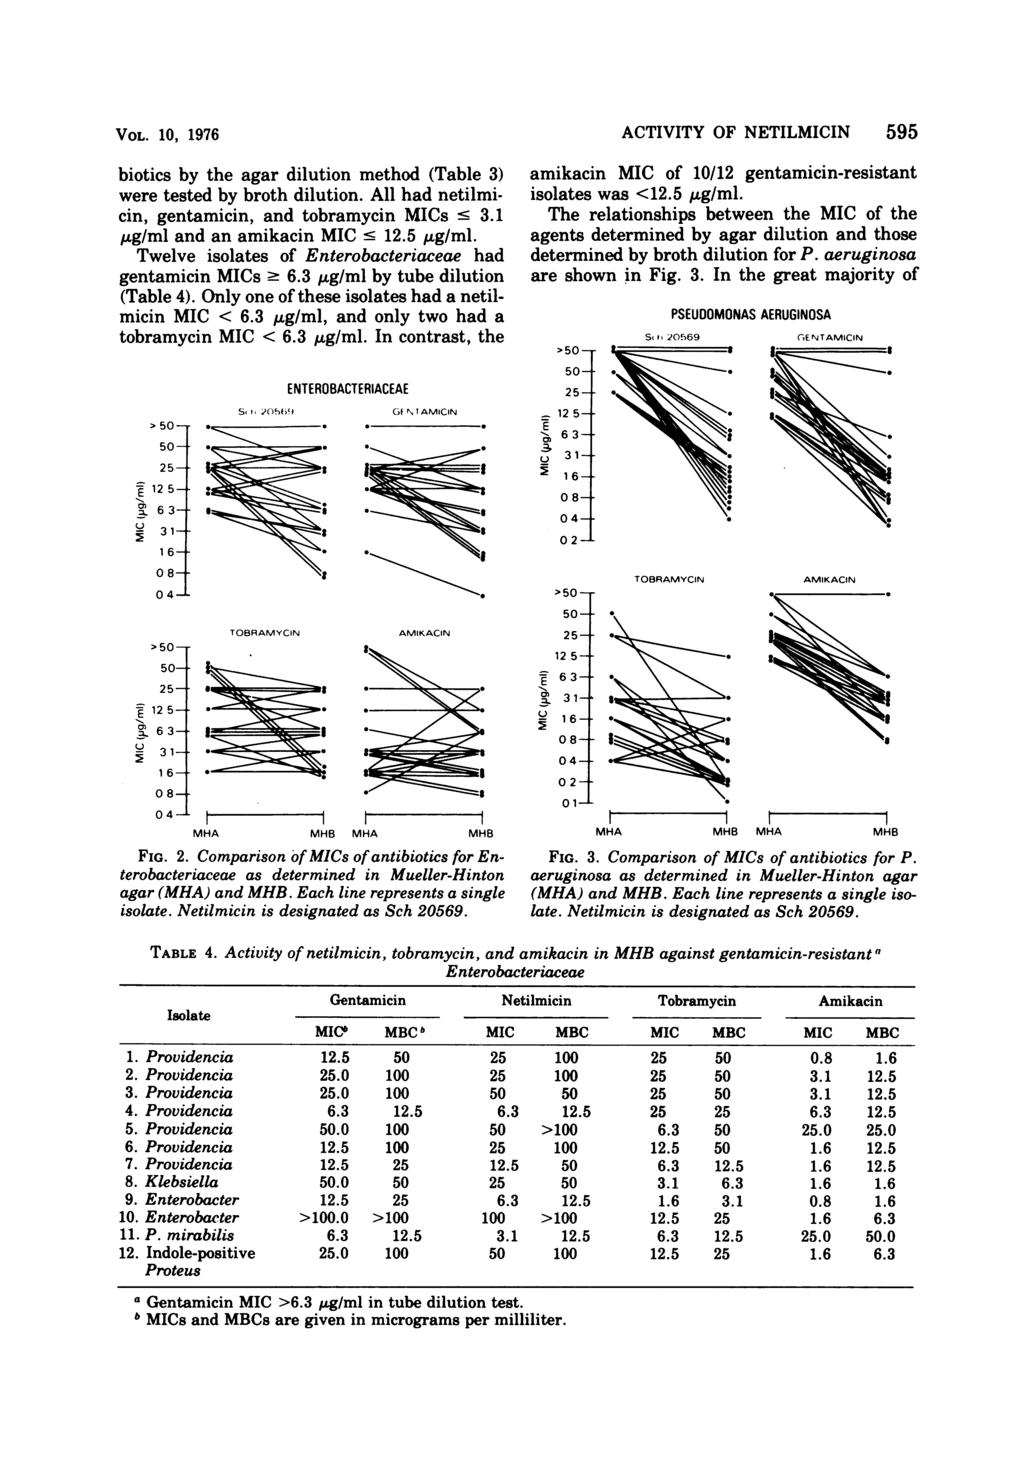 VOL. 1, 1976 biotics by the agar dilution method (Table 3) were tested by broth dilution. All had netilmicin, gentamicin, and tobramycin MICs c 3.1,ug/ml and an amikacin MIC c 12.5,ug/ml.